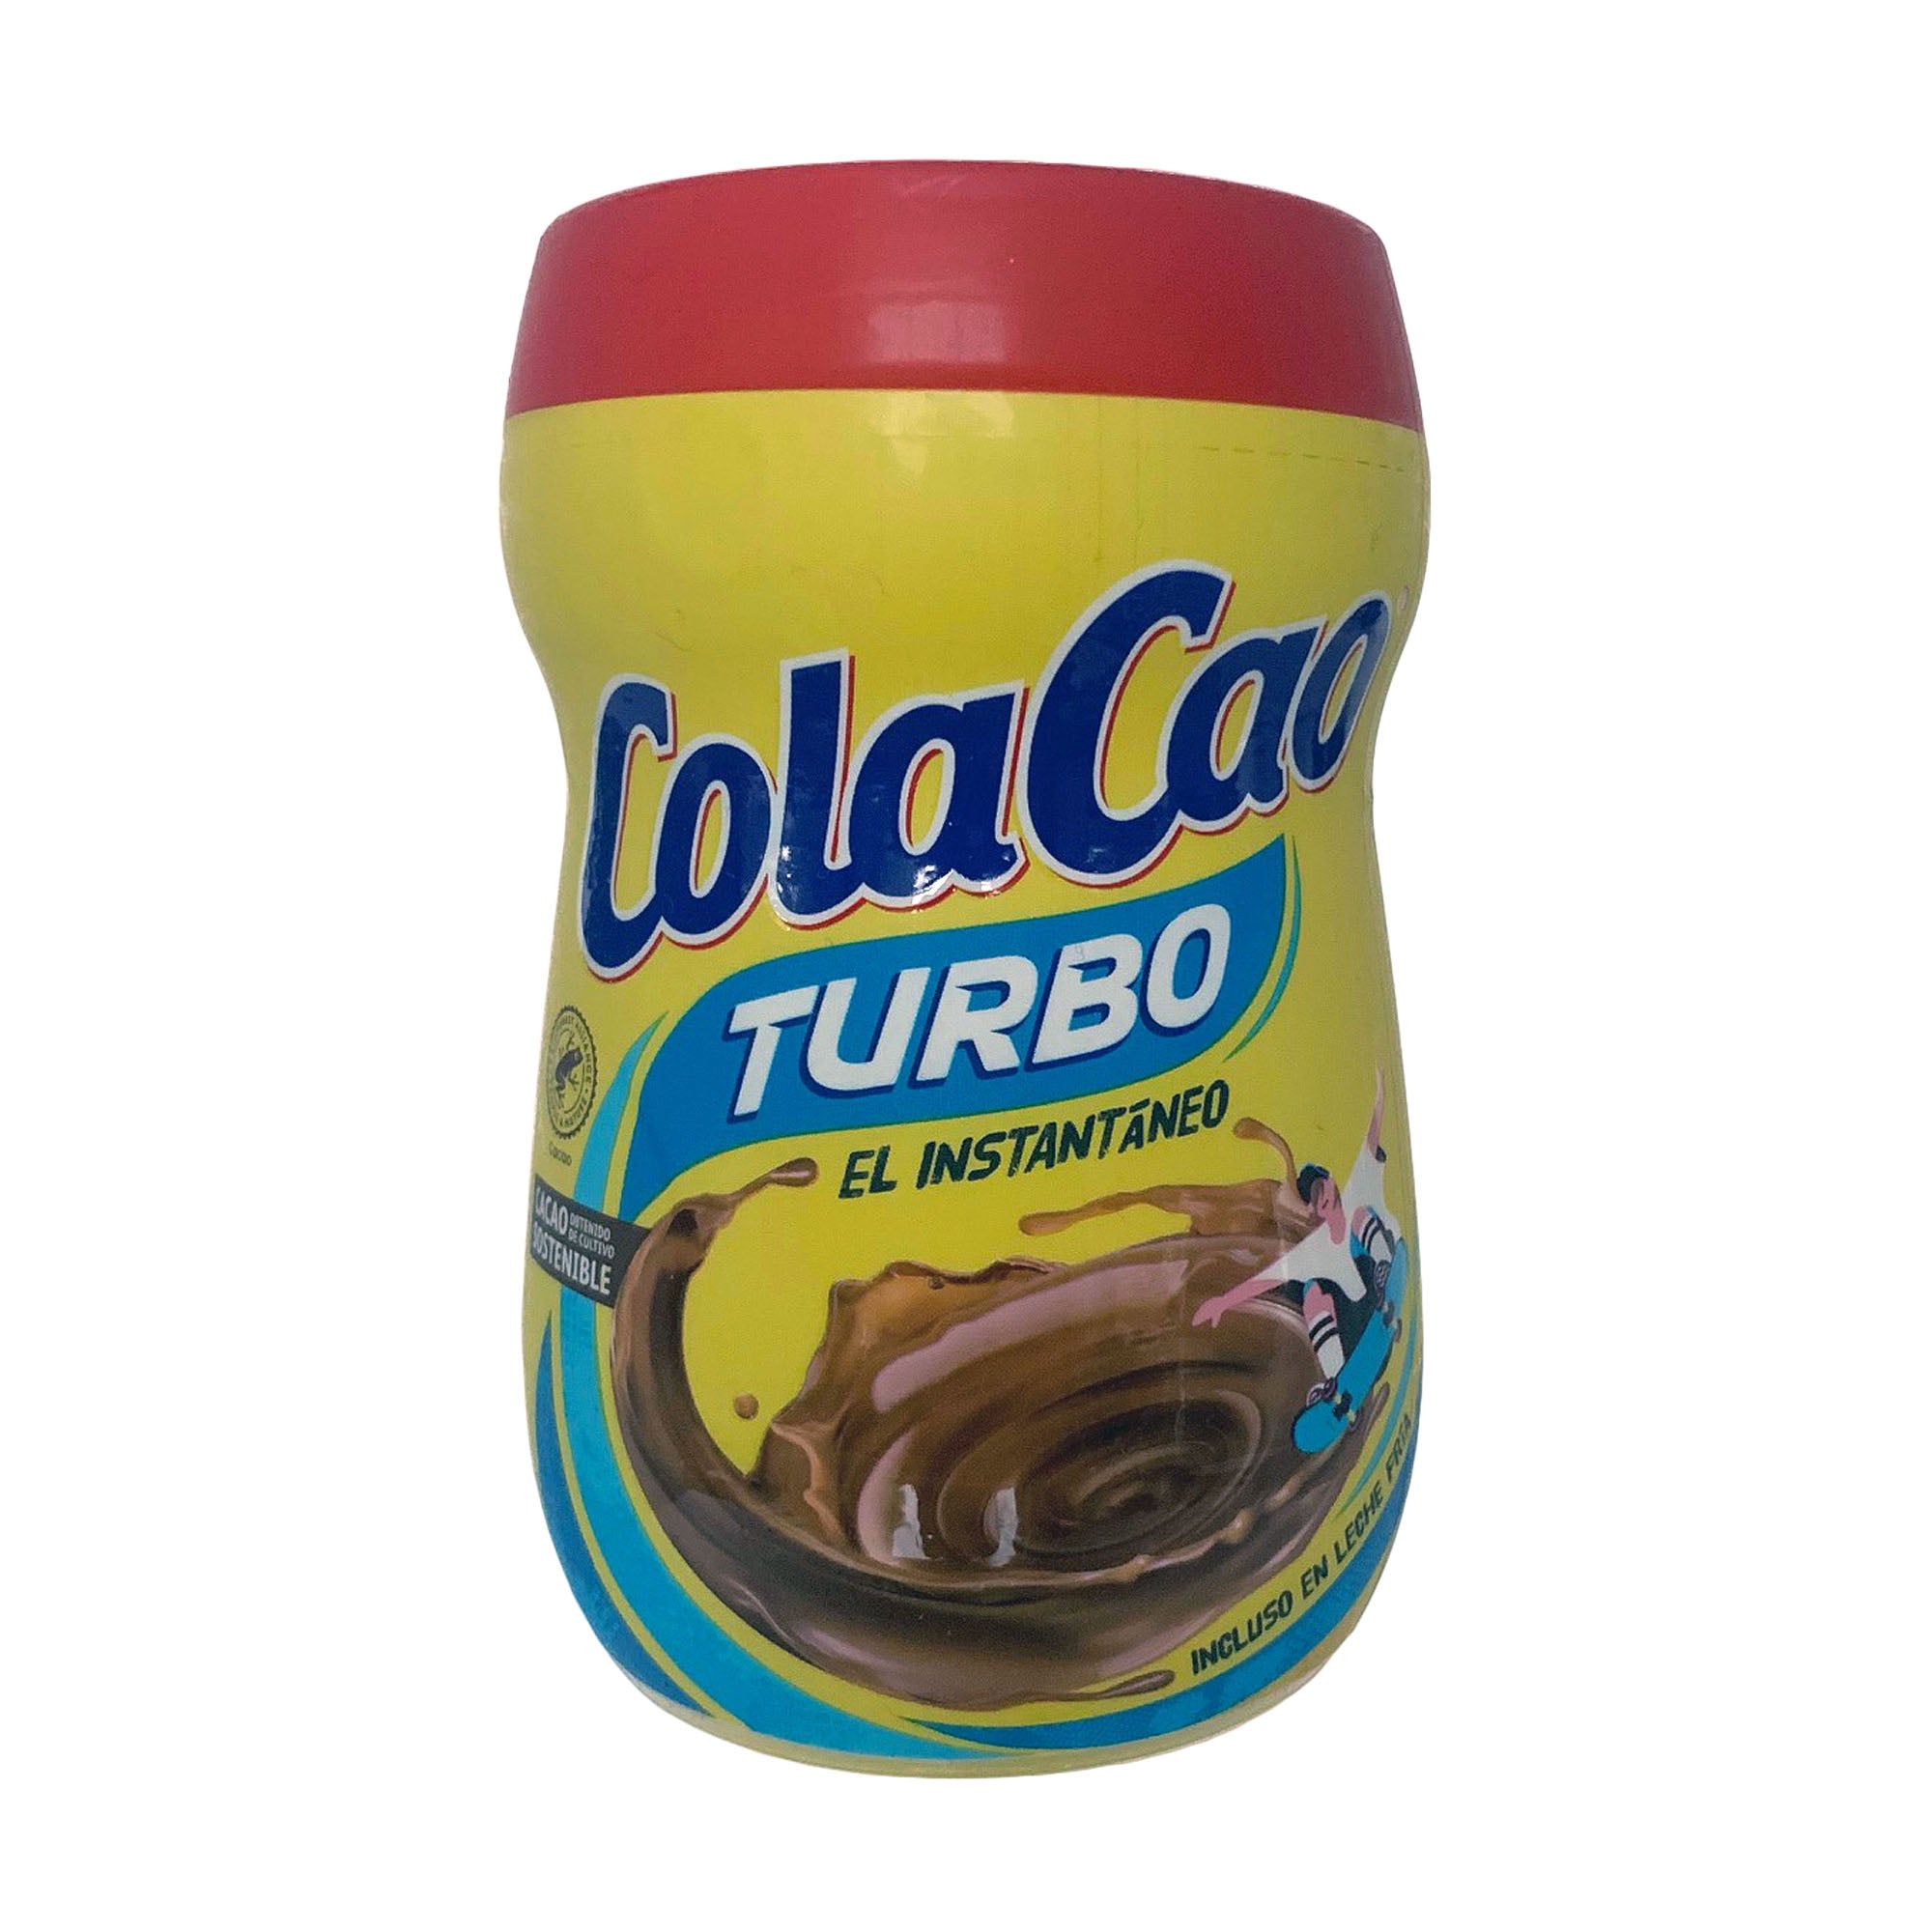 Chocolate Colacao Turbo 400 Gr.